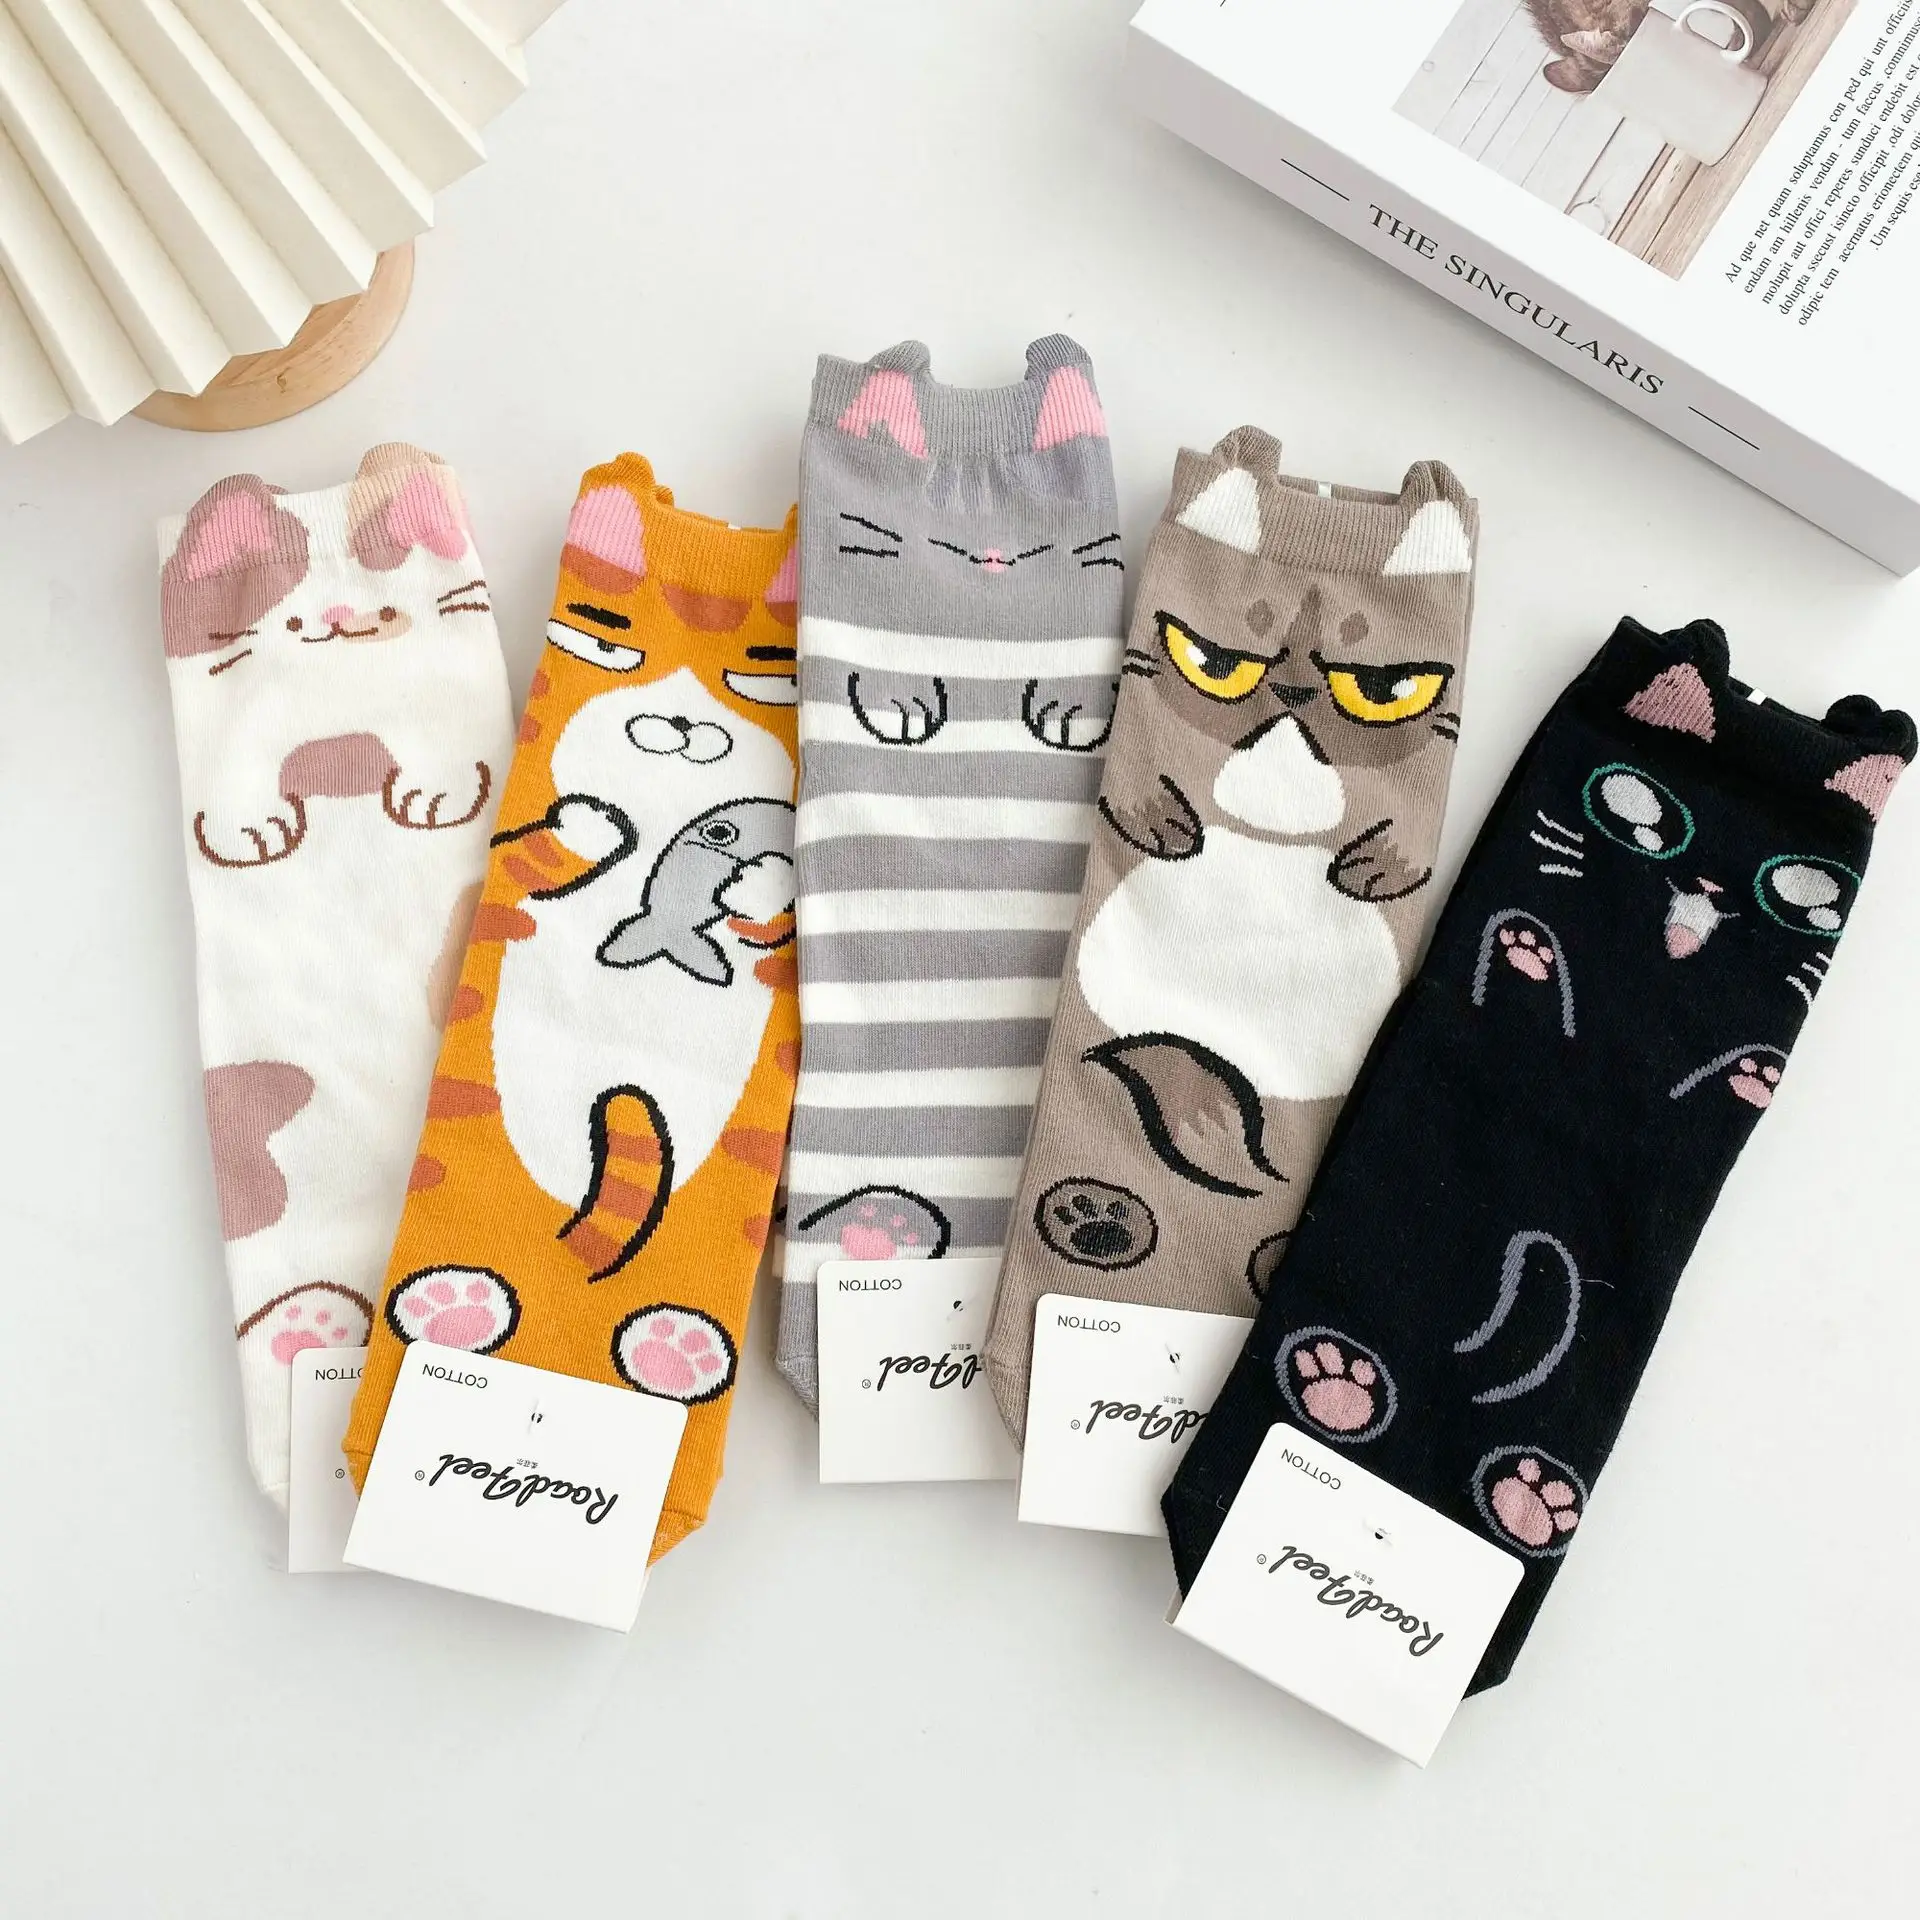 Fashion Cute Cartoon Cat Animal Cotton Girls Socks Set 5 Pairs New Hip Hop Trend Kawai Colorful Women's Cotton Socks